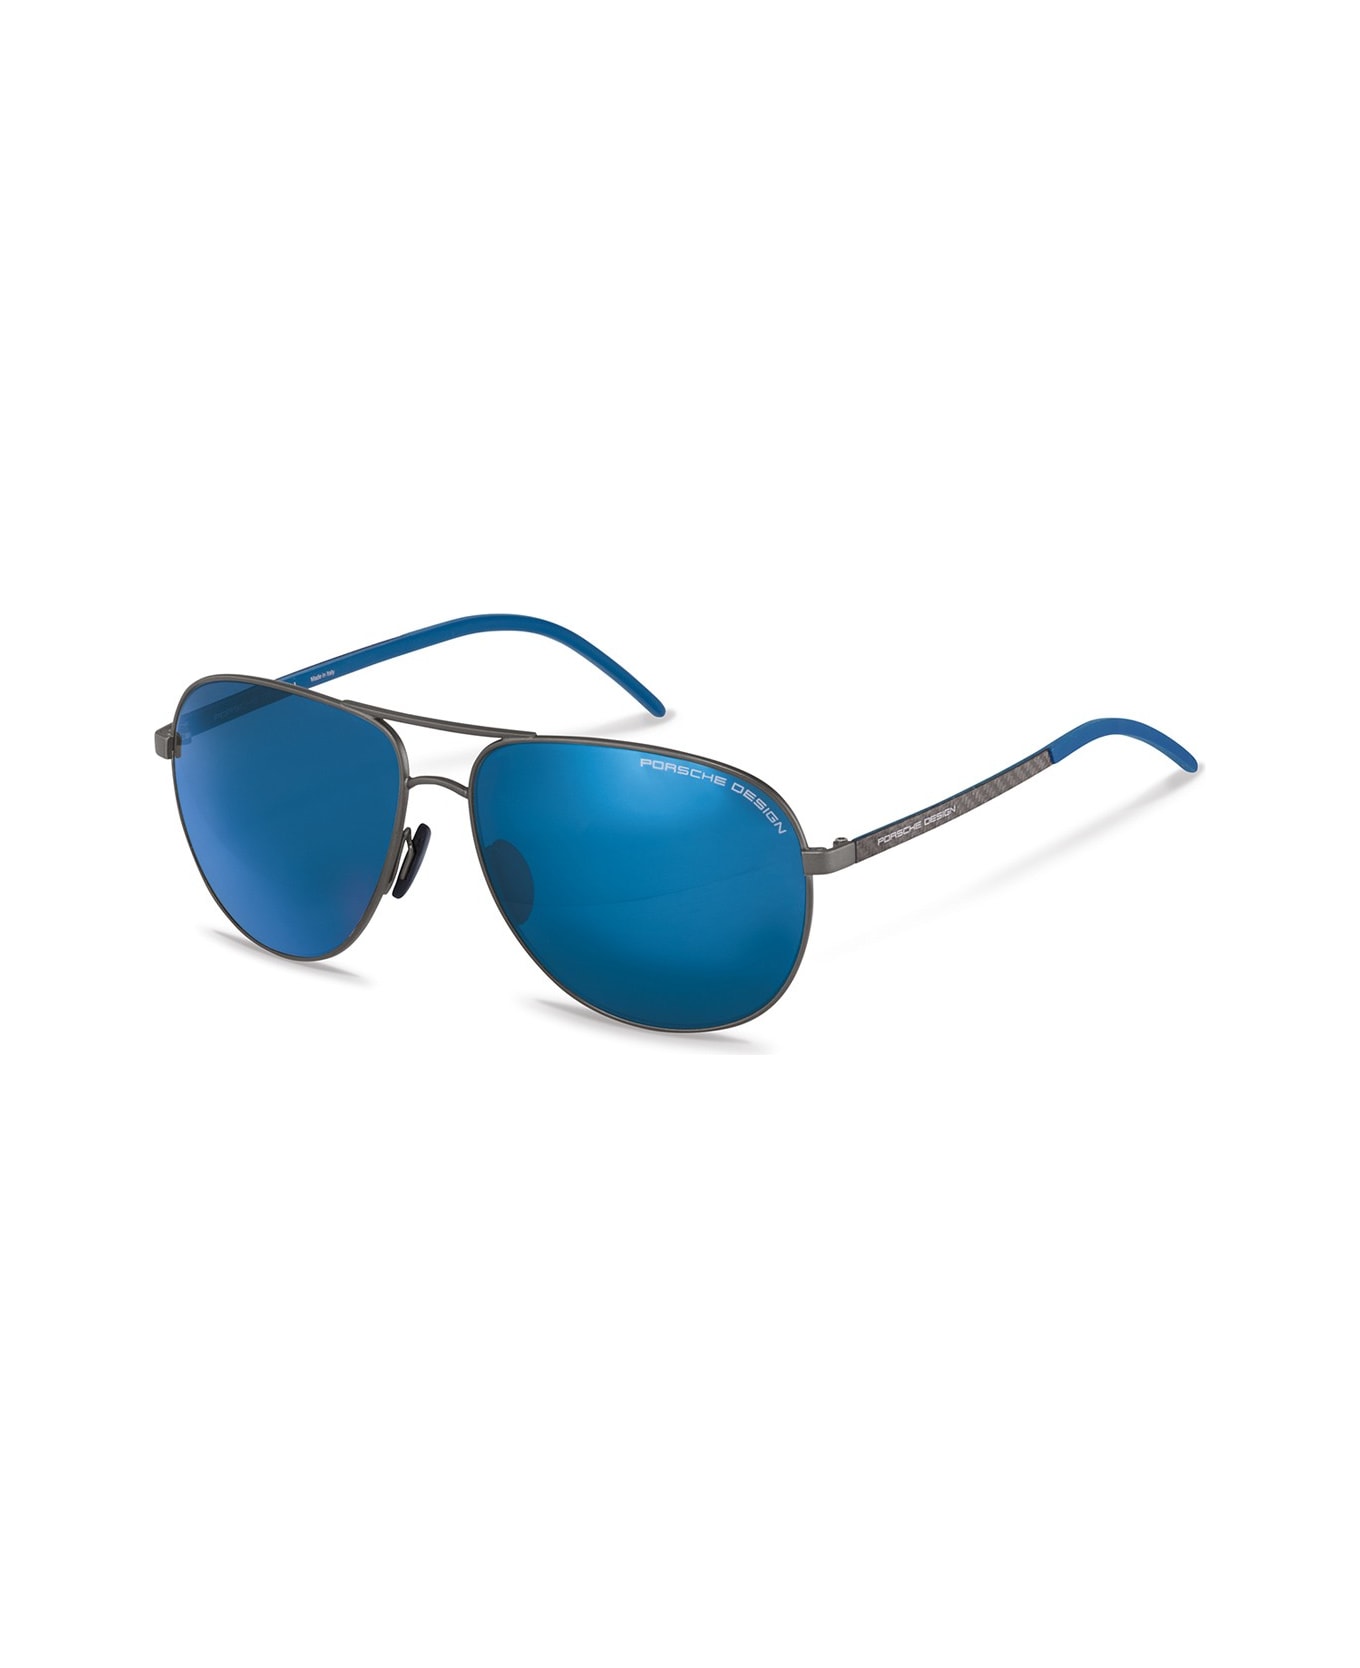 Porsche Design P8651 Sunglasses - Grigio